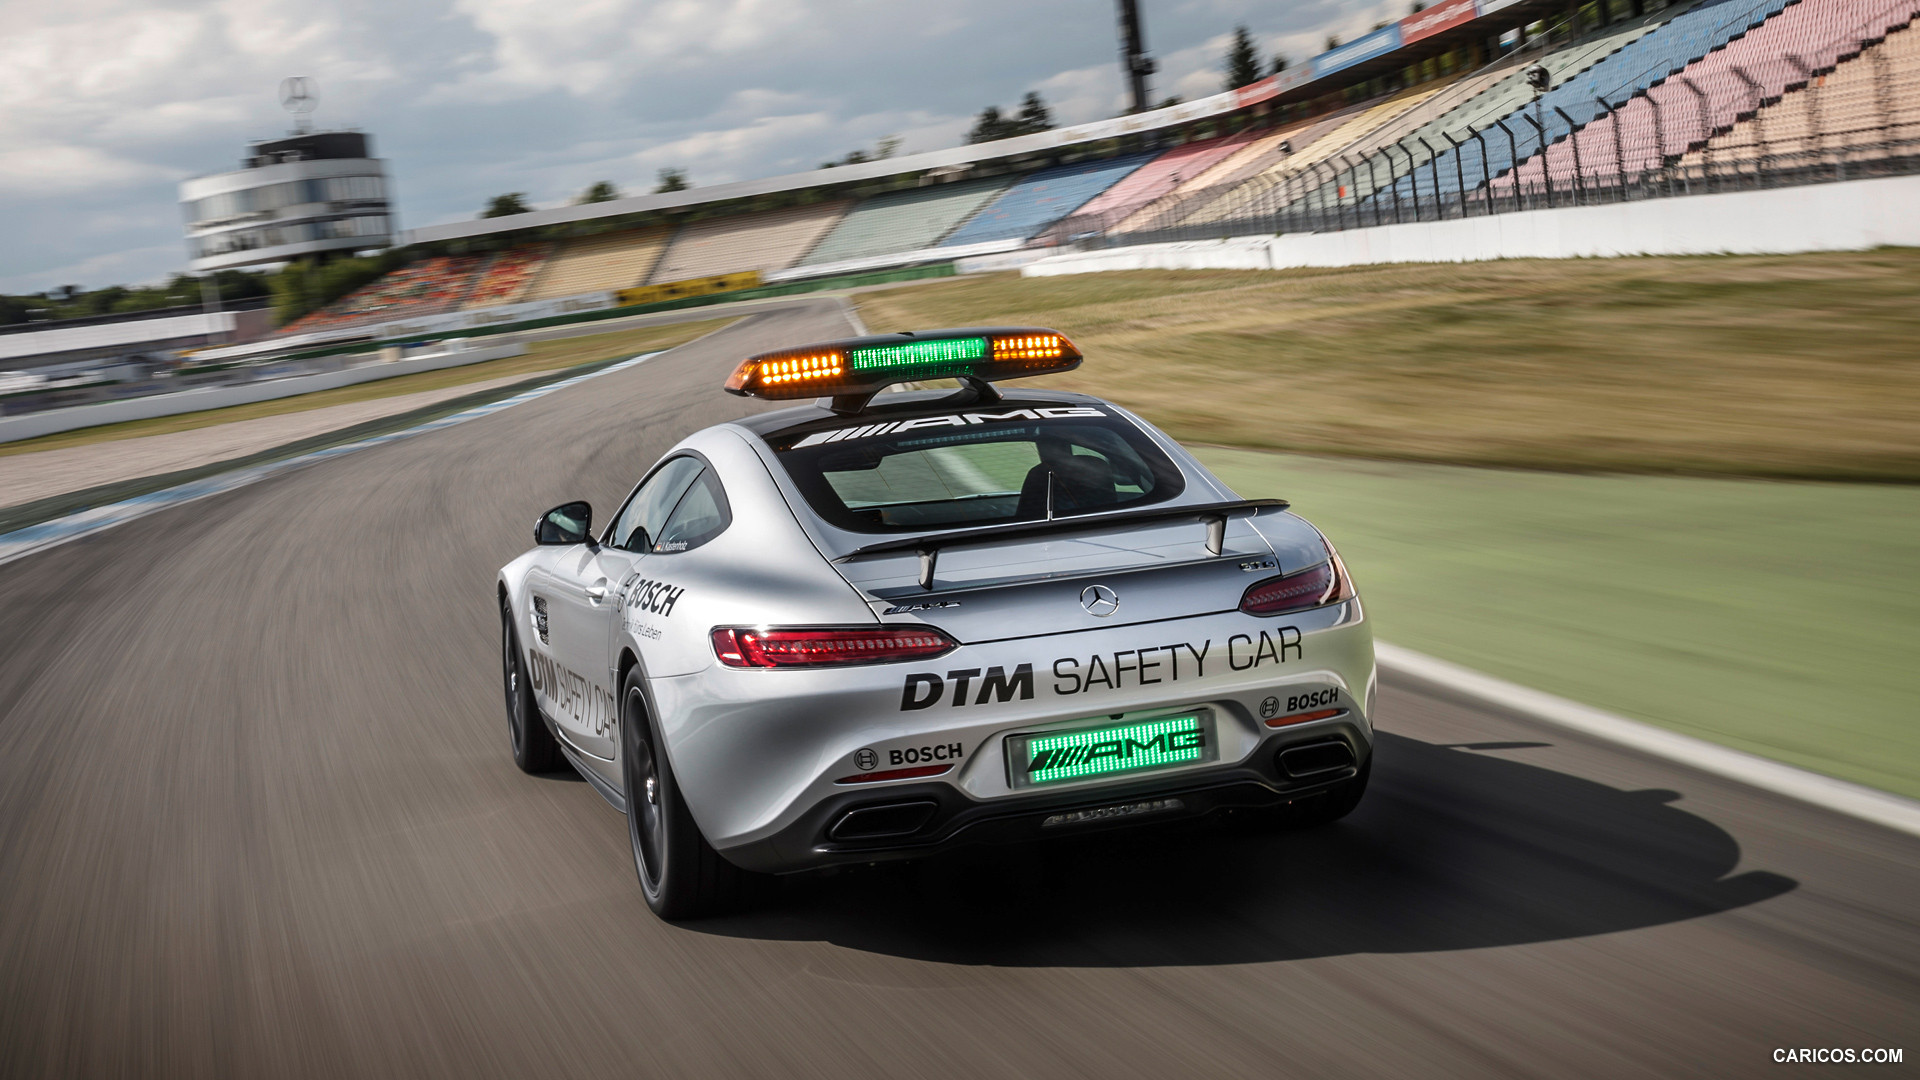 2015 Mercedes-AMG GT S DTM Safety Car  - Rear, #6 of 16